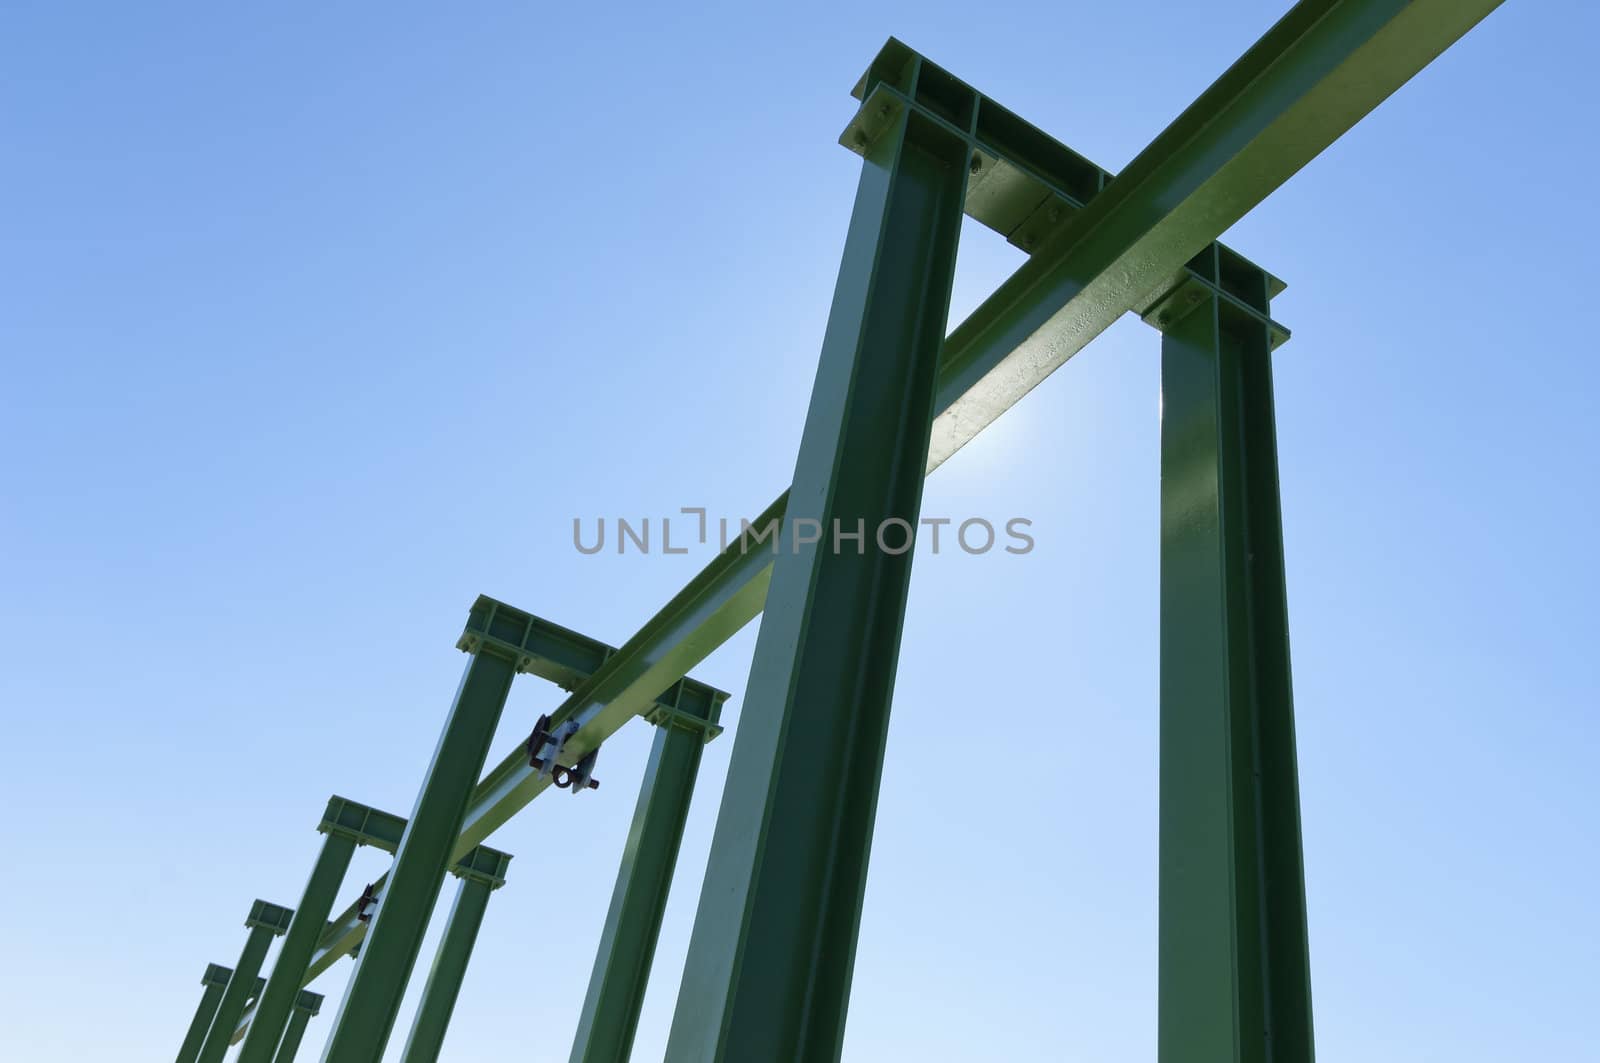 Gantry crane by mrfotos